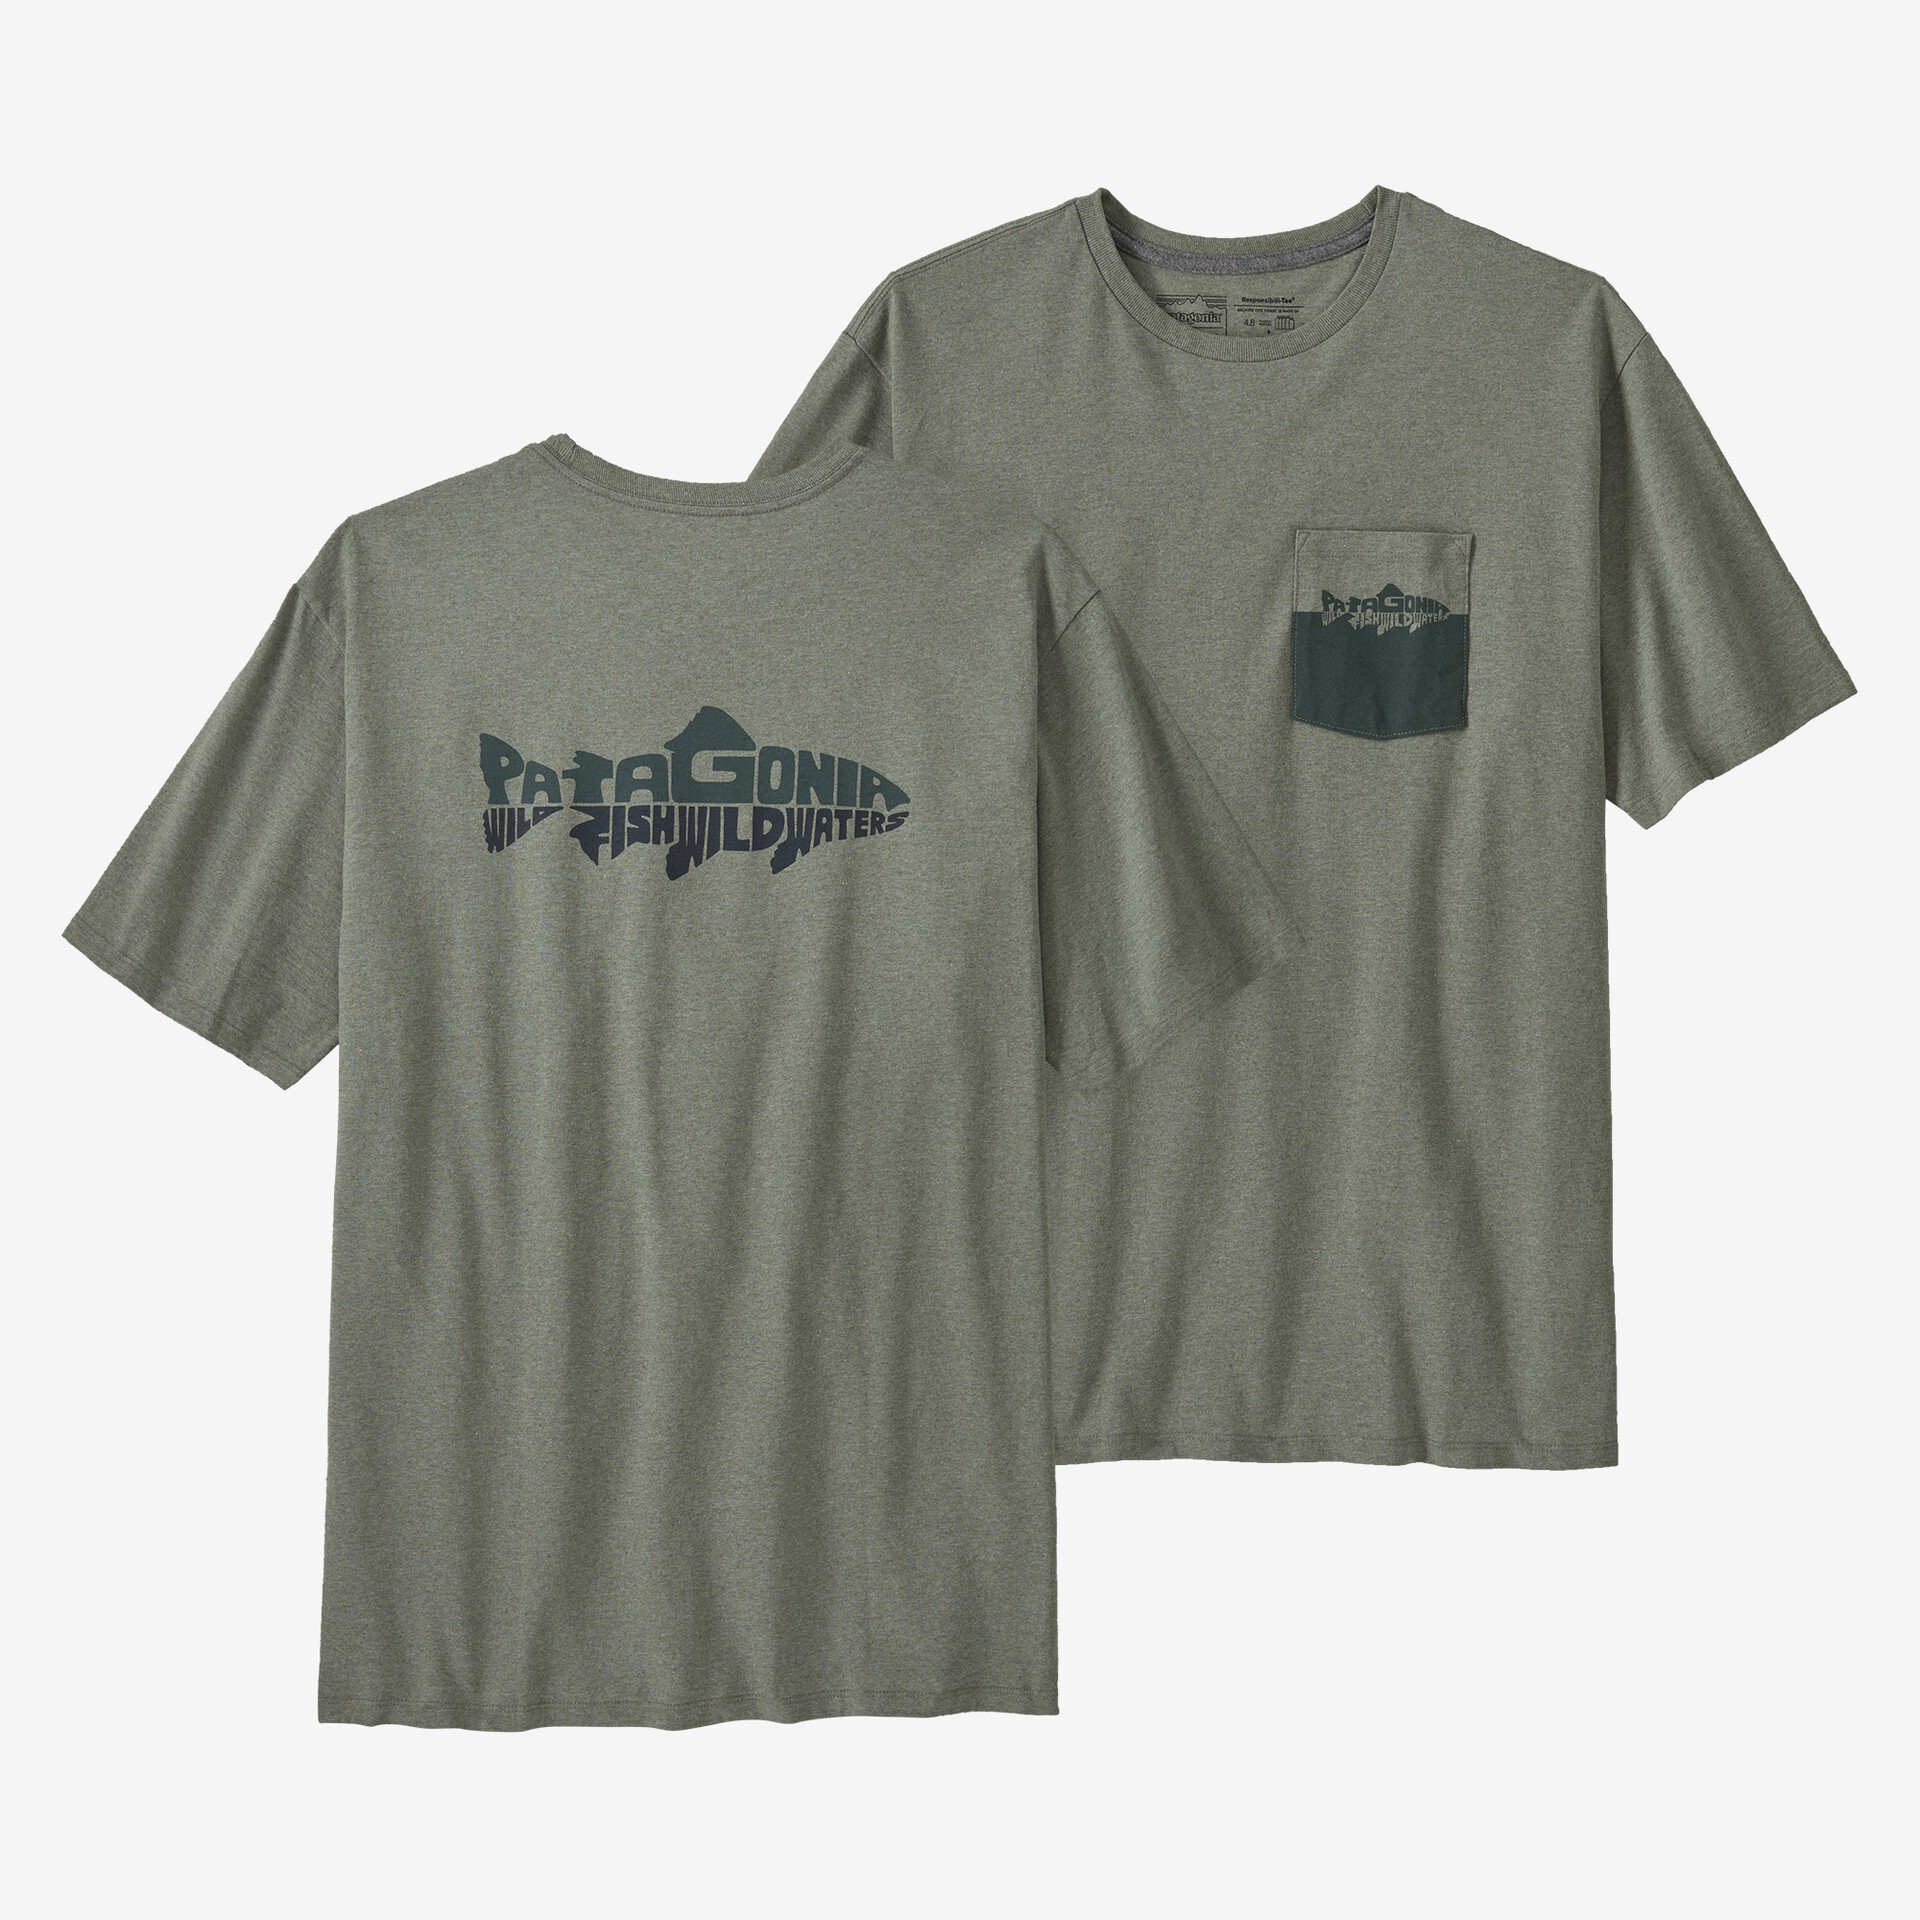 Мужская ответственная футболка с карманом Wild Waterline Patagonia, цвет Sleet Green мужская ответственная футболка с логотипом и карманом patagonia серый